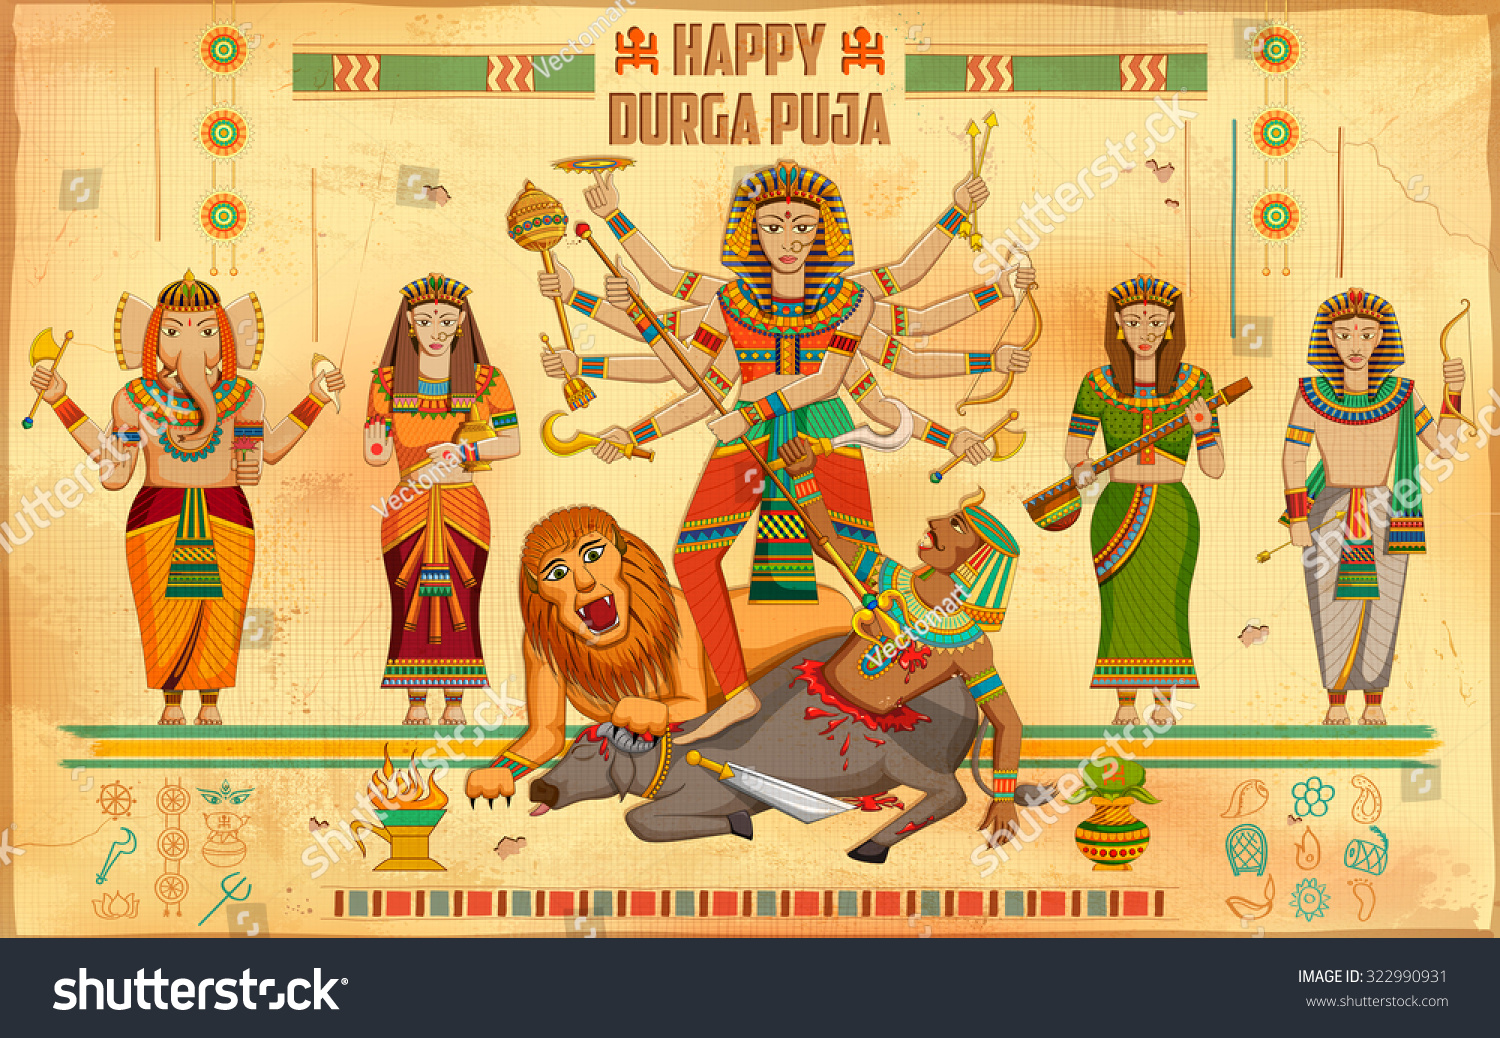 Illustration Of Happy Durga Puja Background - 322990931 : Shutterstock